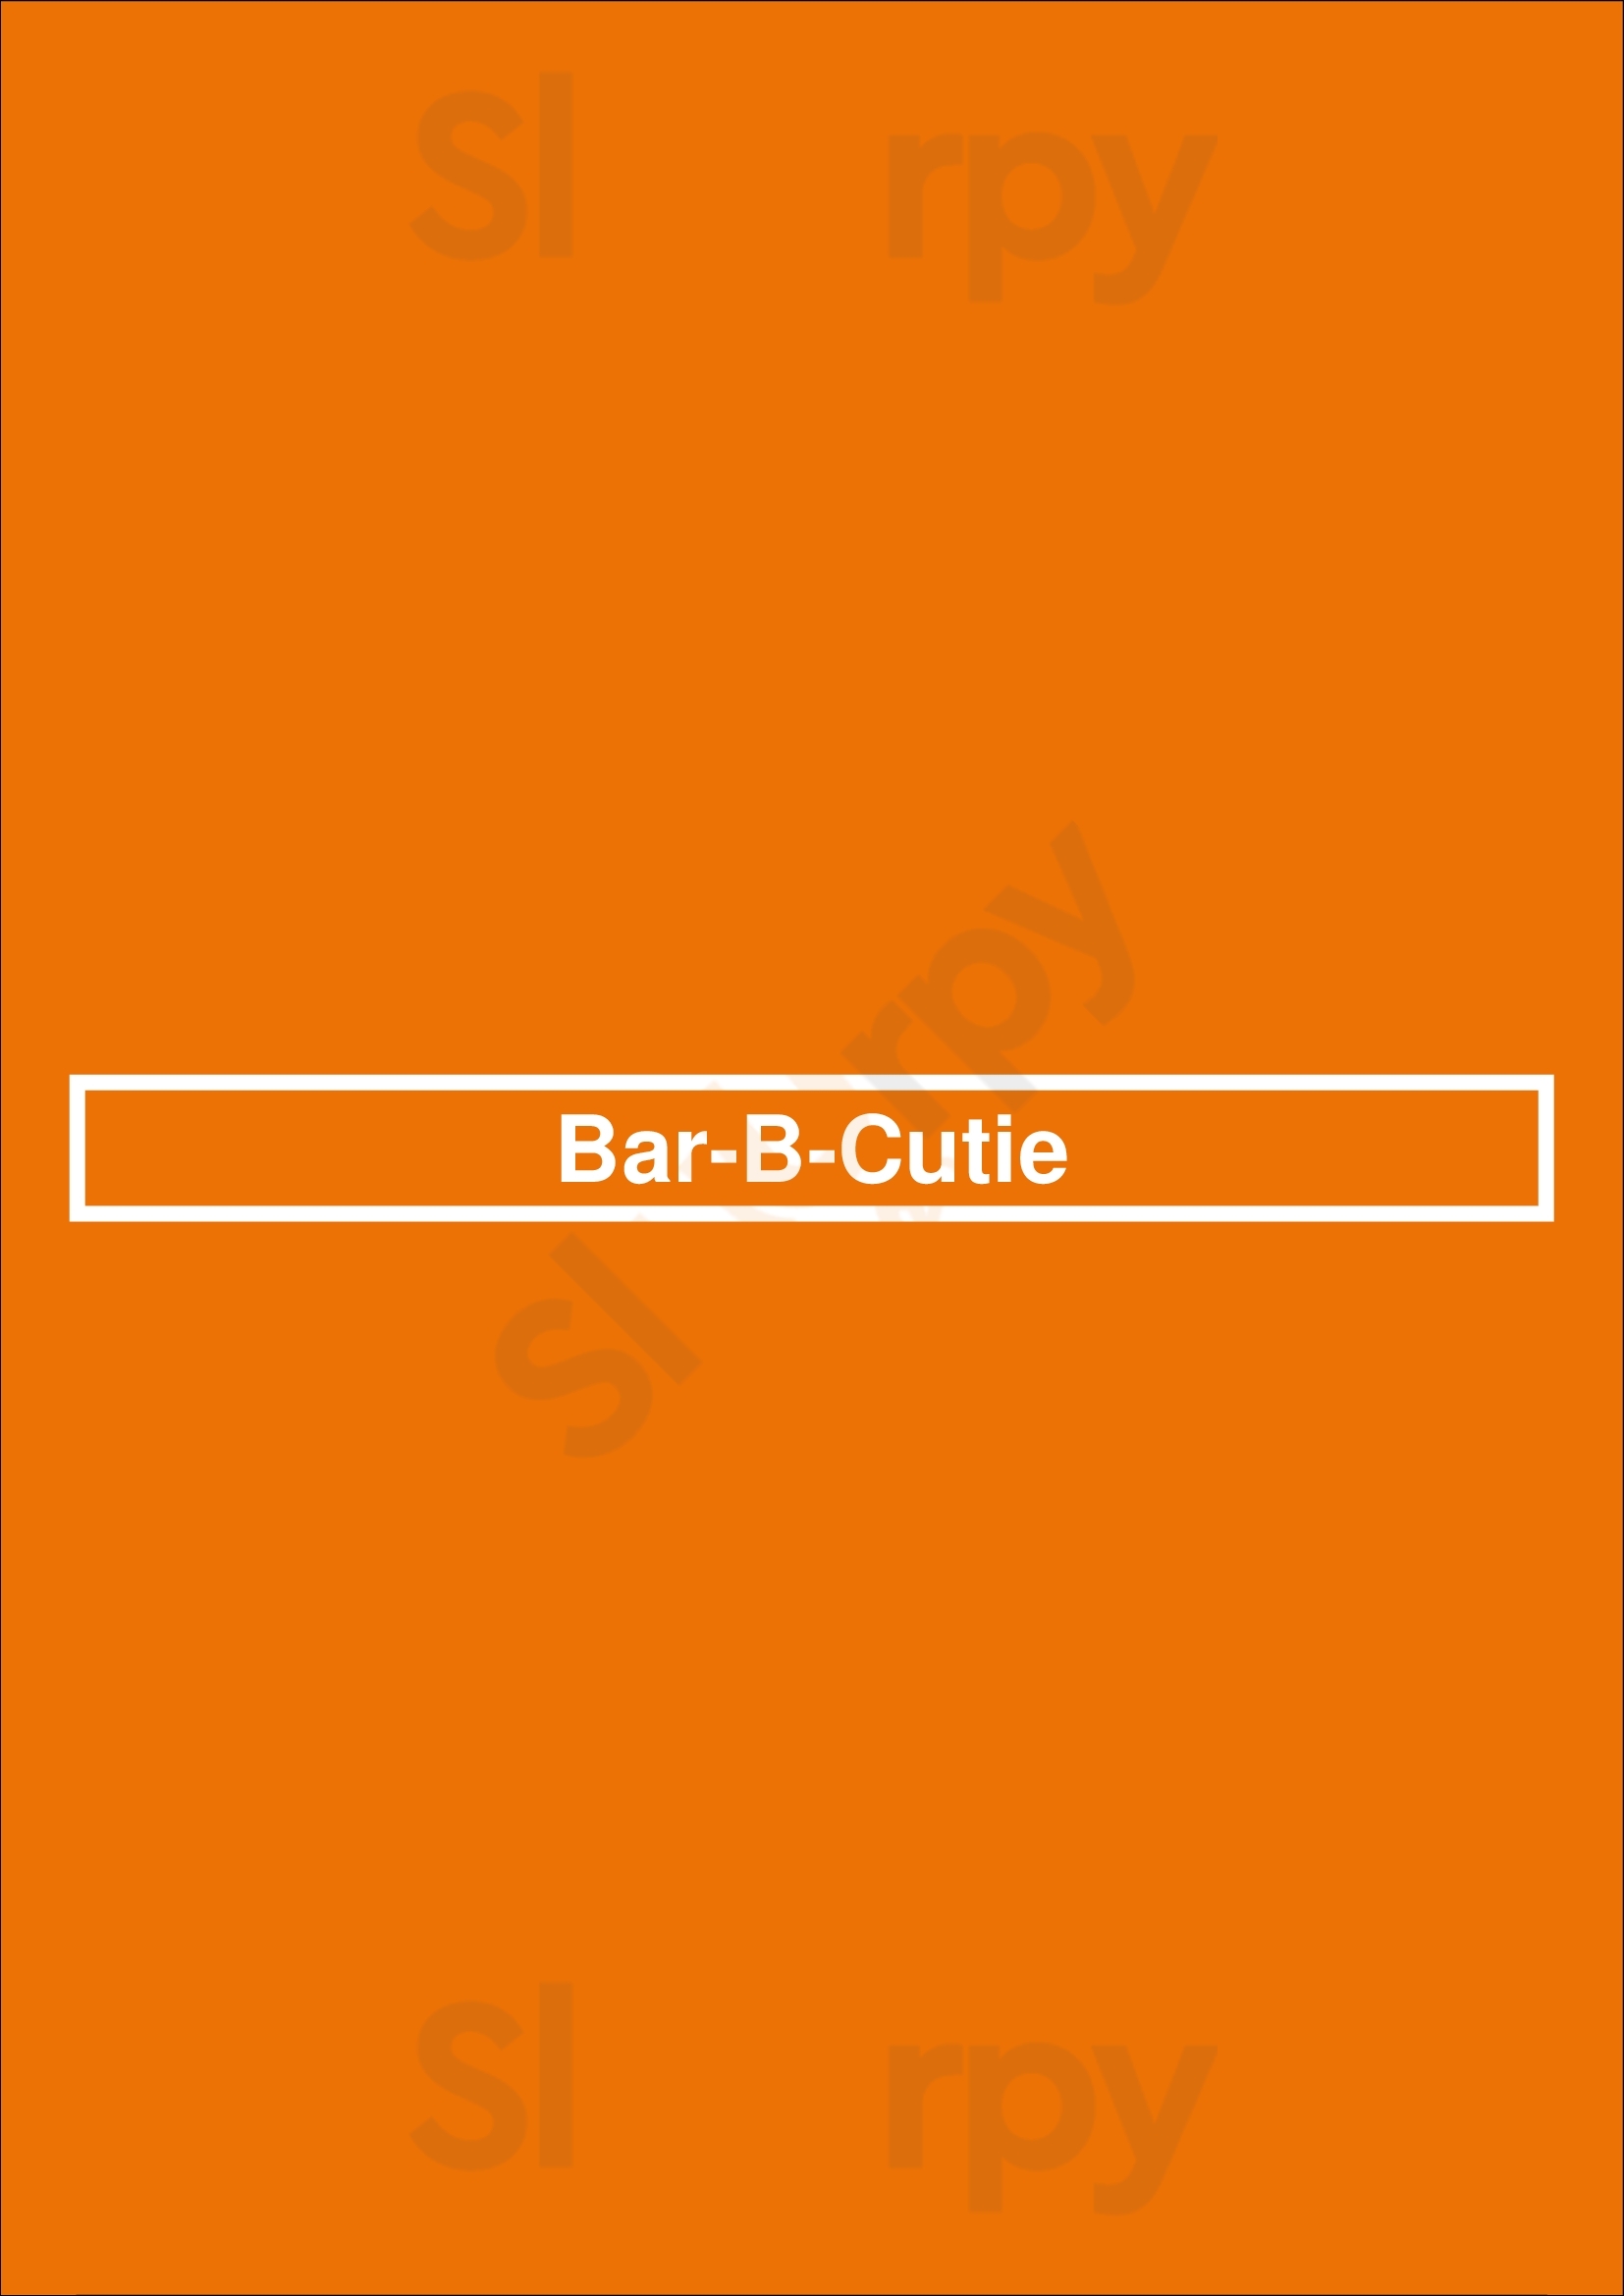 Bar-b-cutie San Antonio Menu - 1